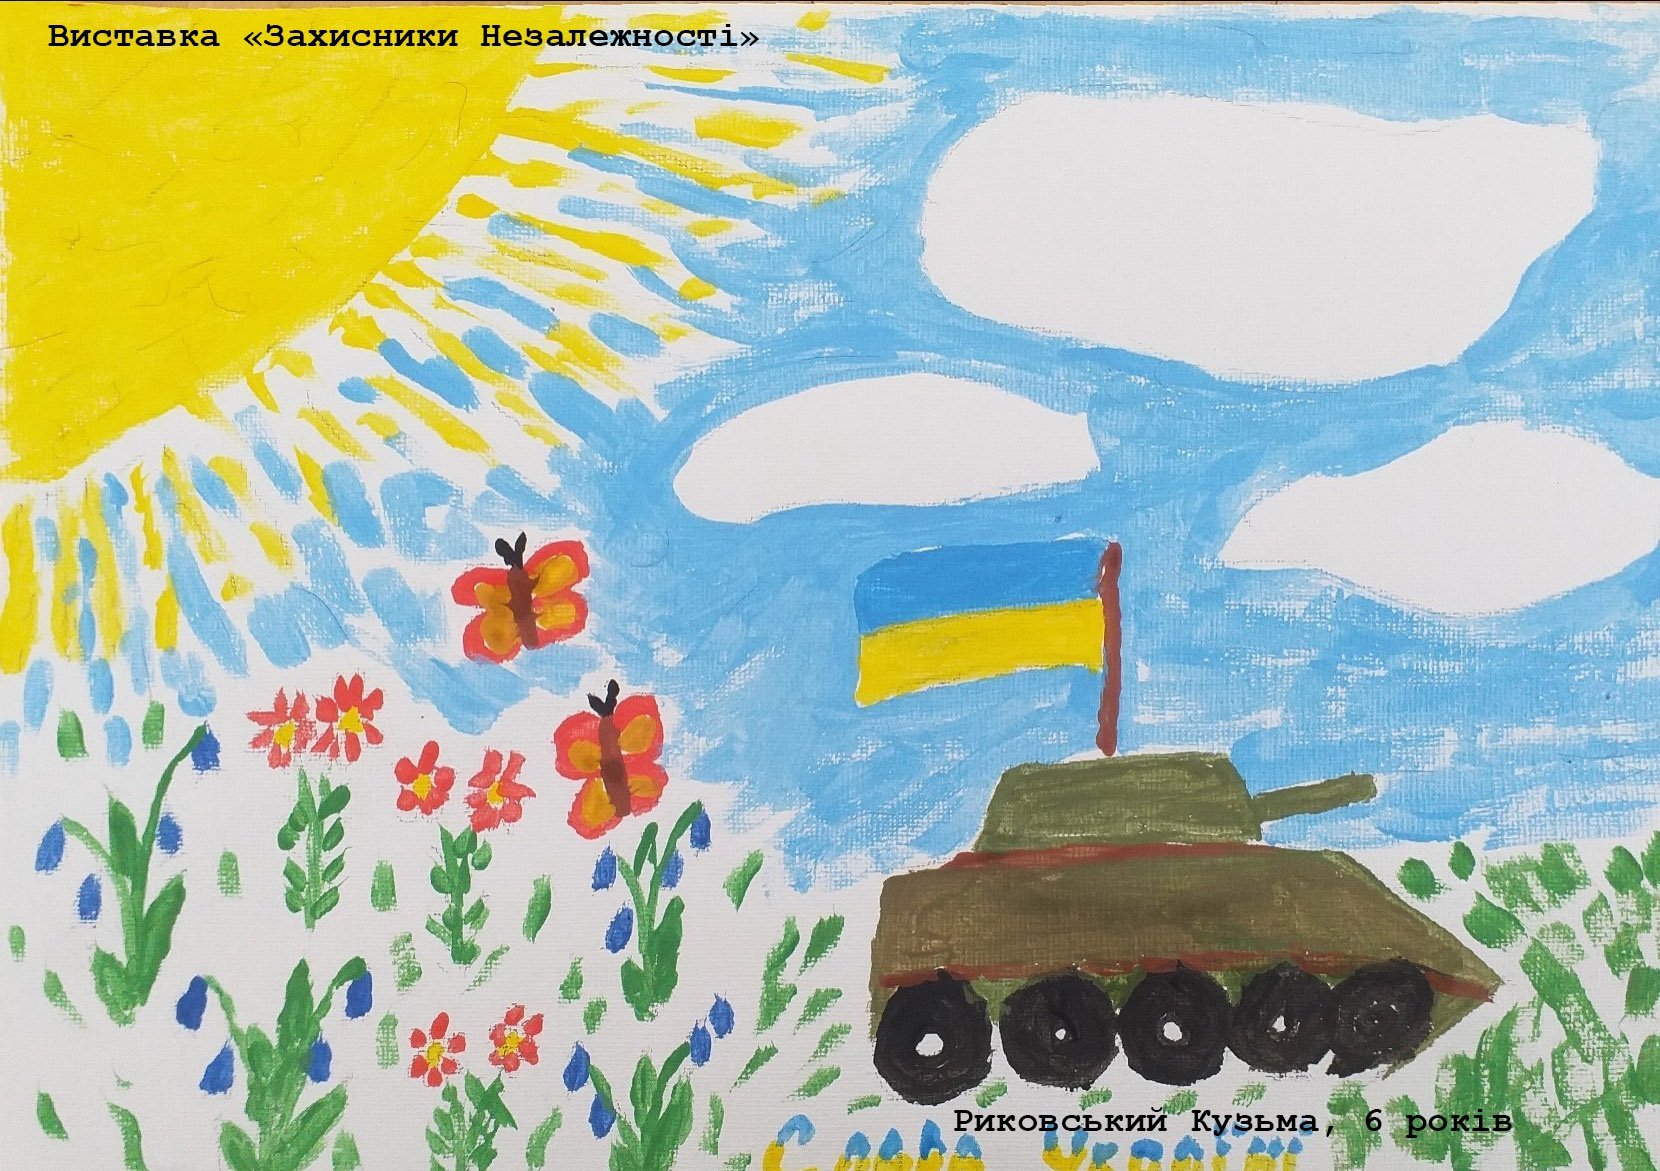   Artist: Kuzma Rikovski, 6 years old.  “Ukrainian Defenders” exhibit of children’s drawings at the Mykolaiv library. 